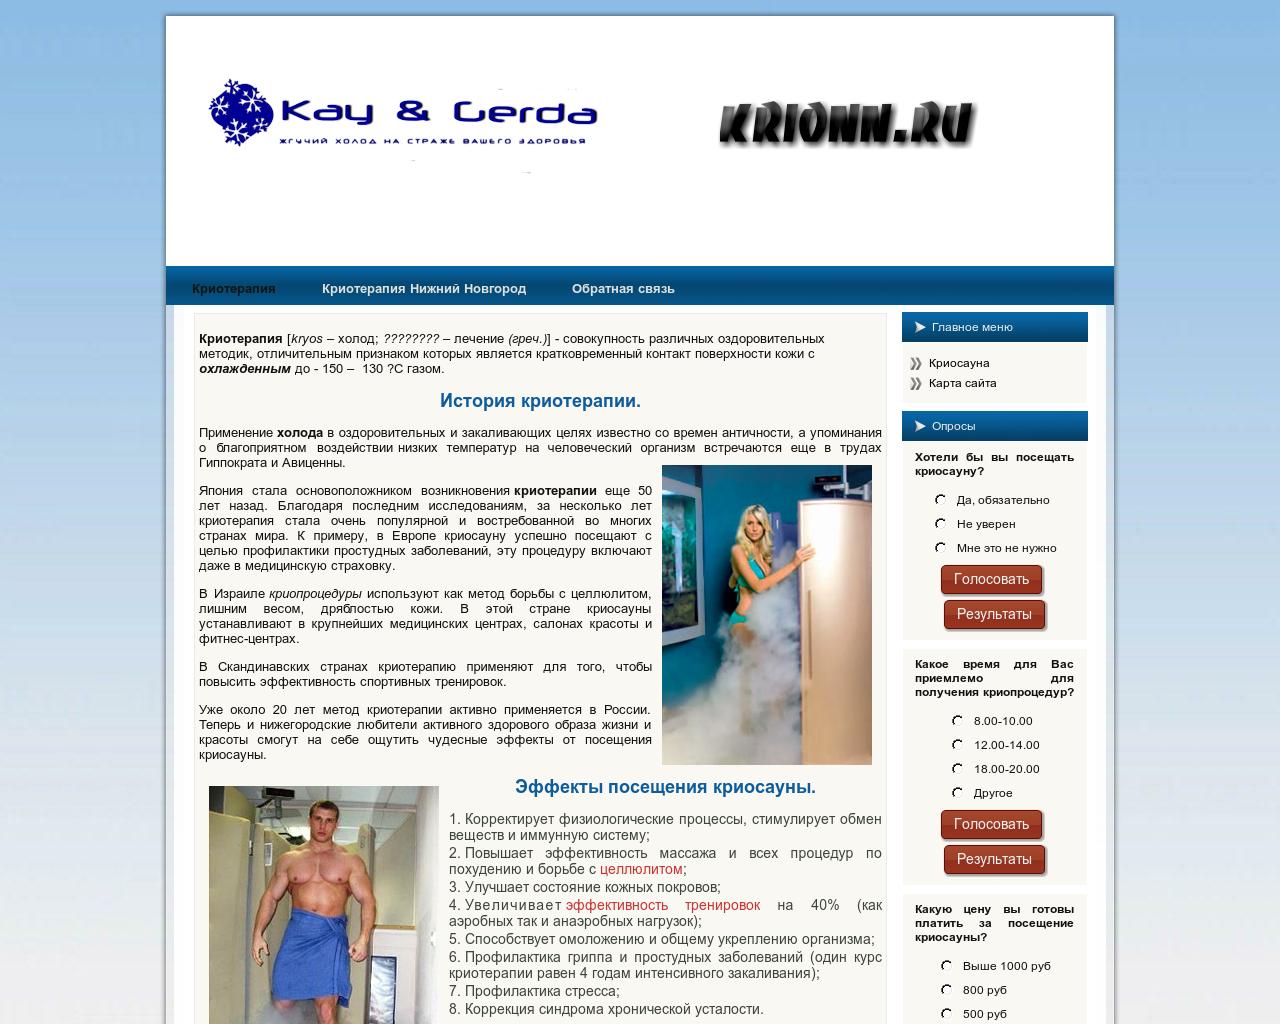 Изображение сайта krionn.ru в разрешении 1280x1024